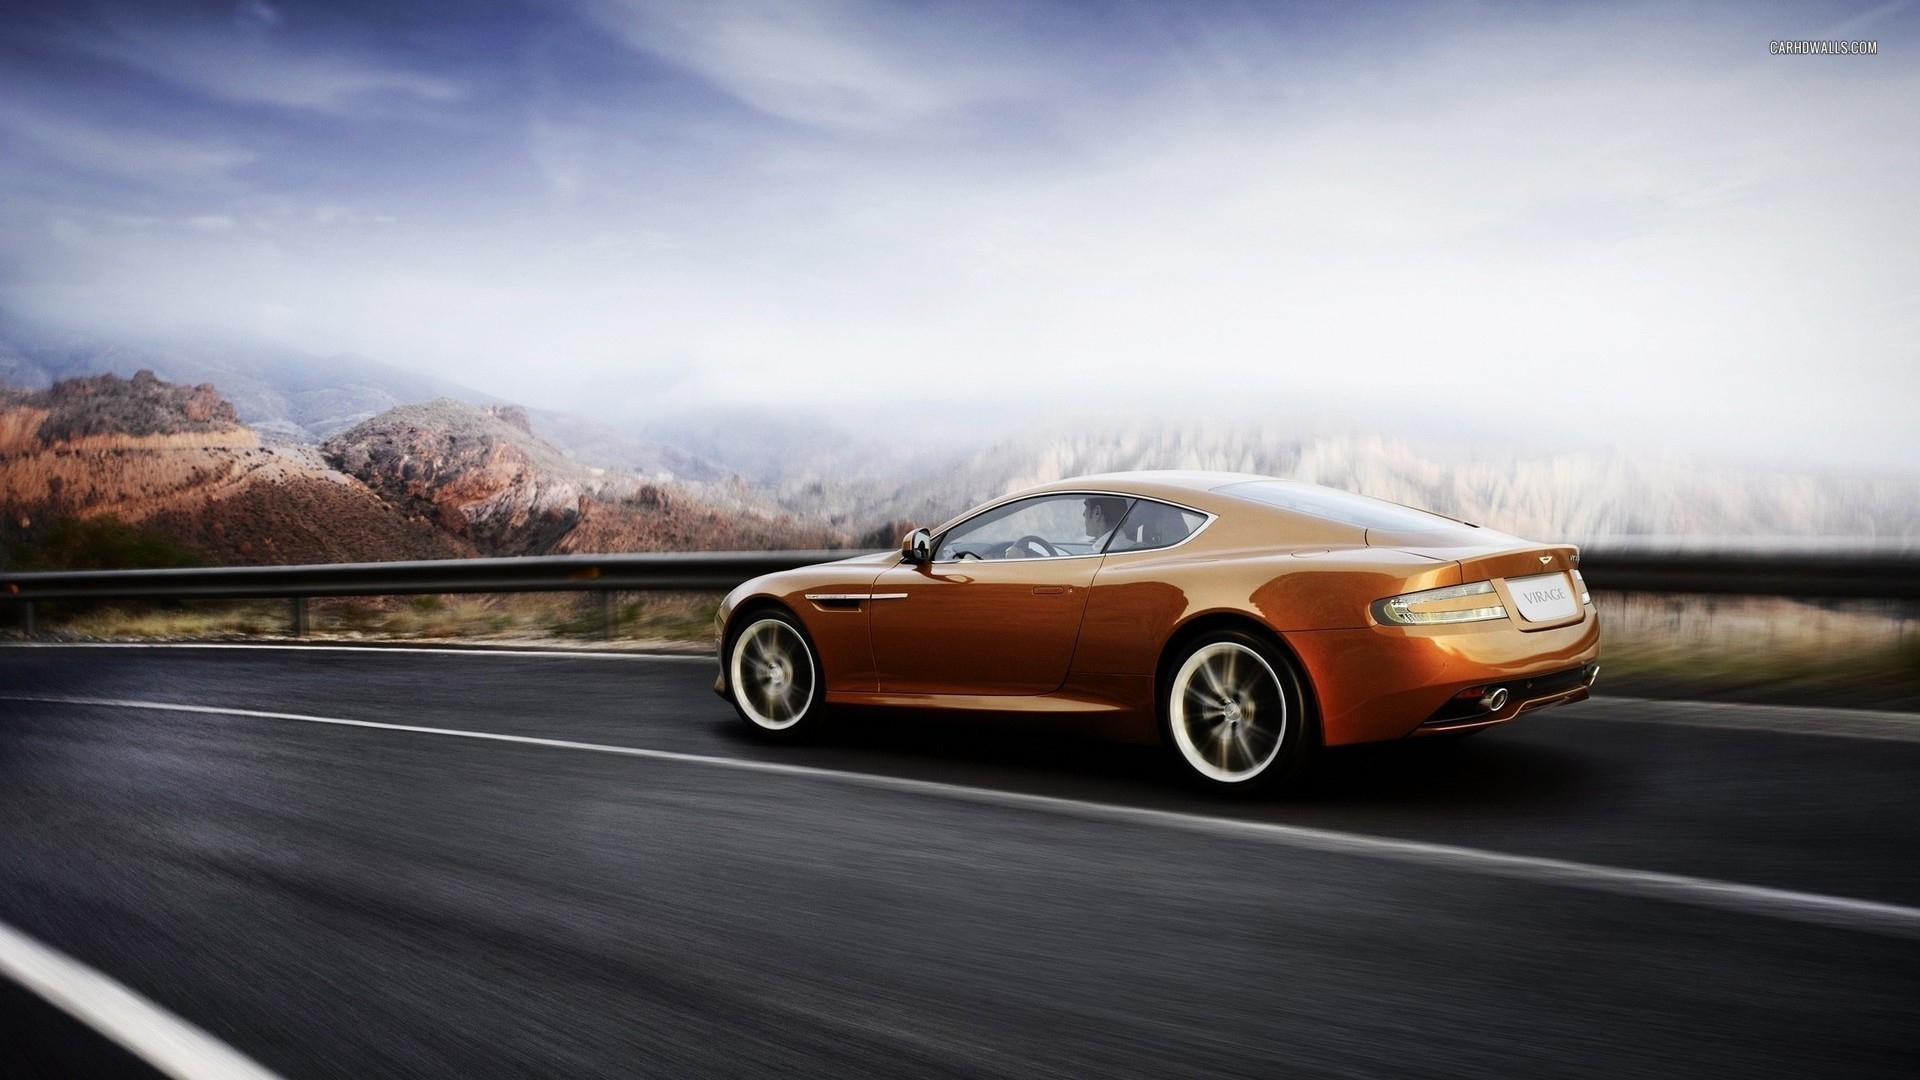 Автомобиль марки Aston Martin модели virage